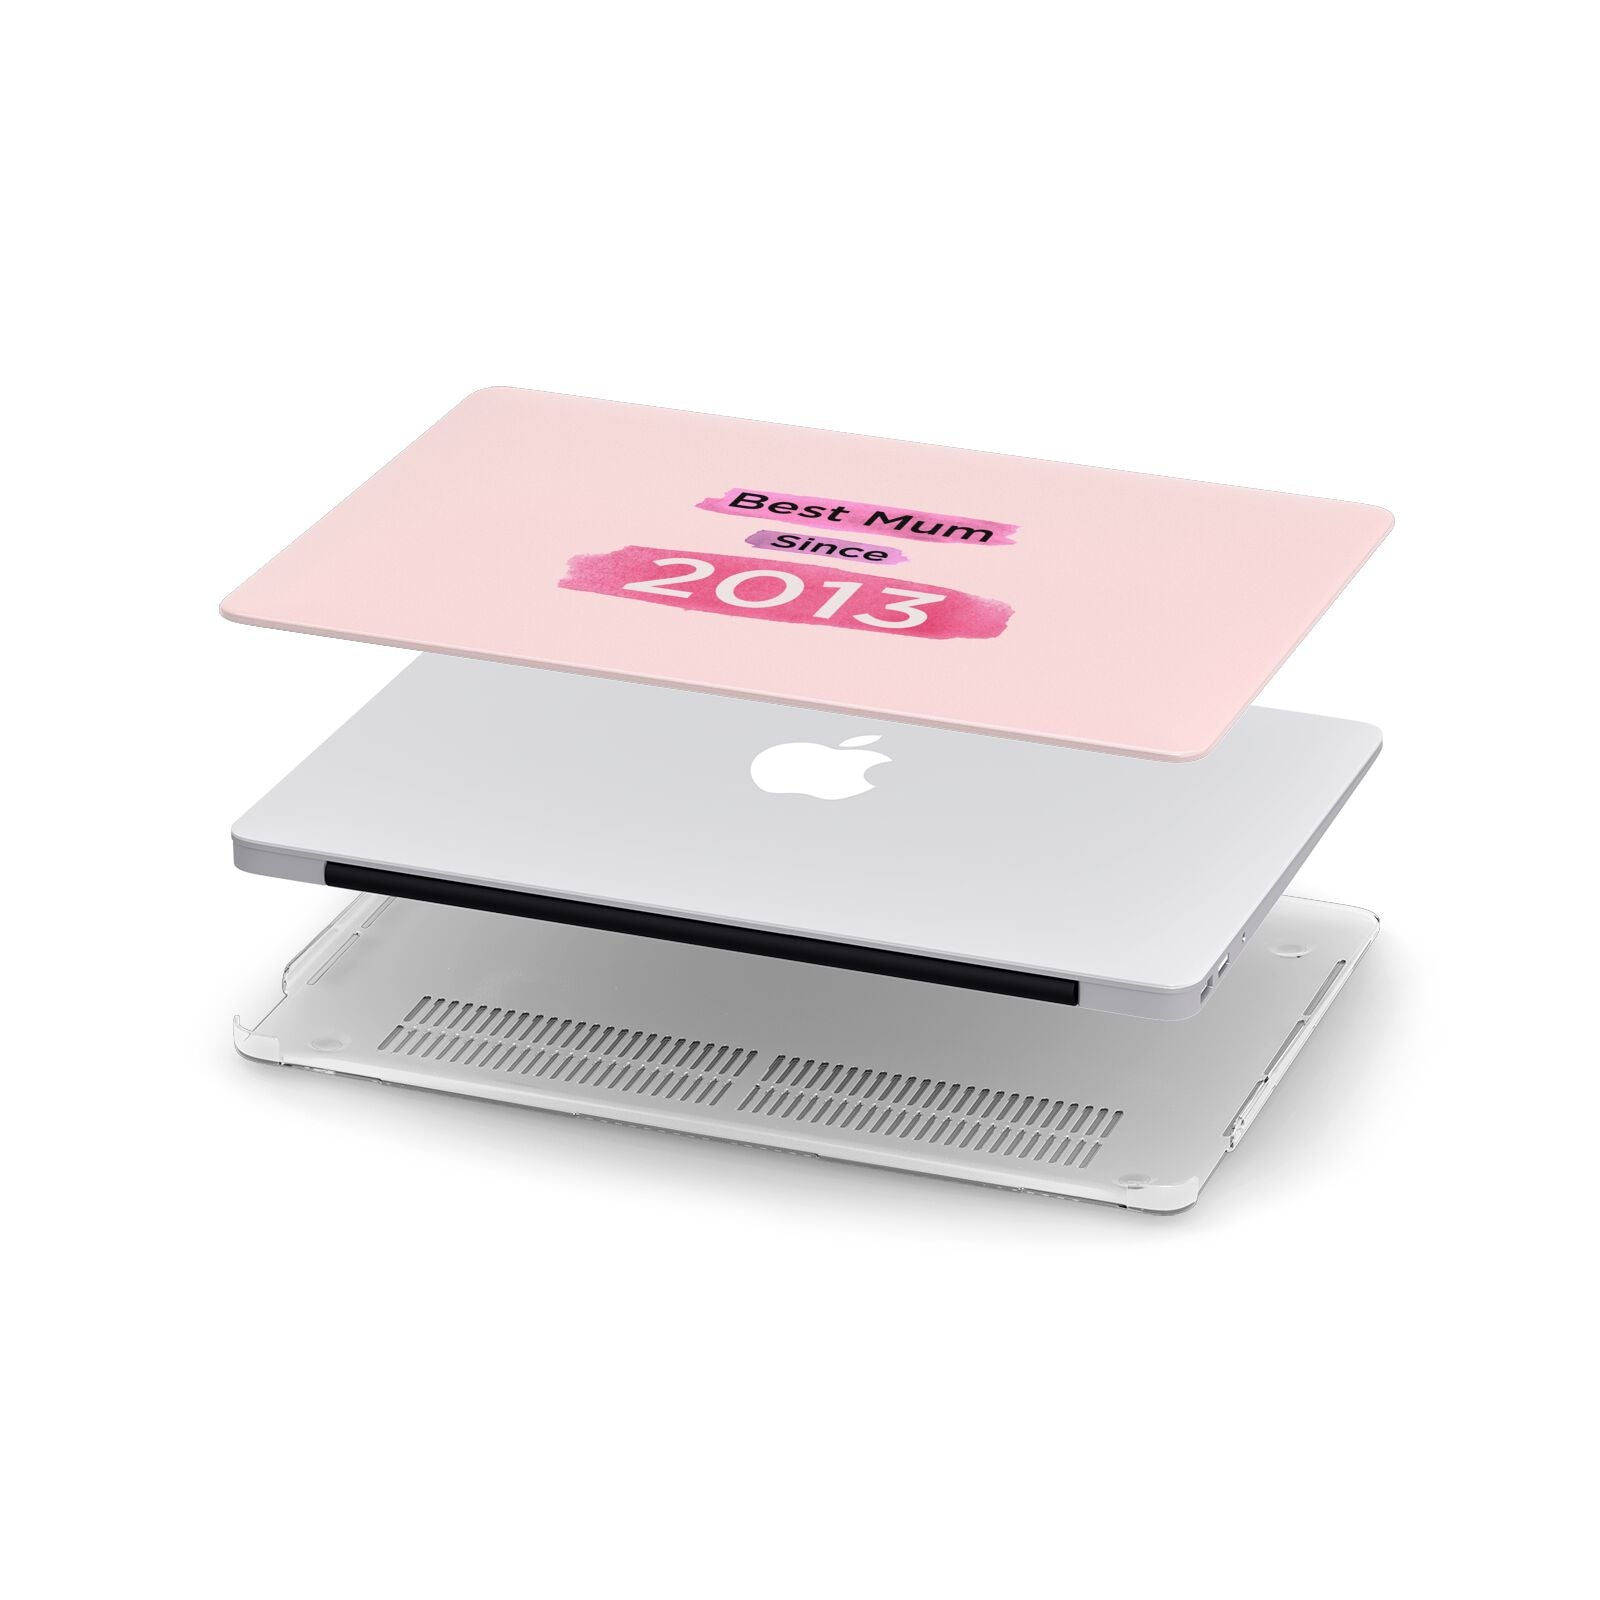 Pink Best Mum Apple MacBook Case in Detail